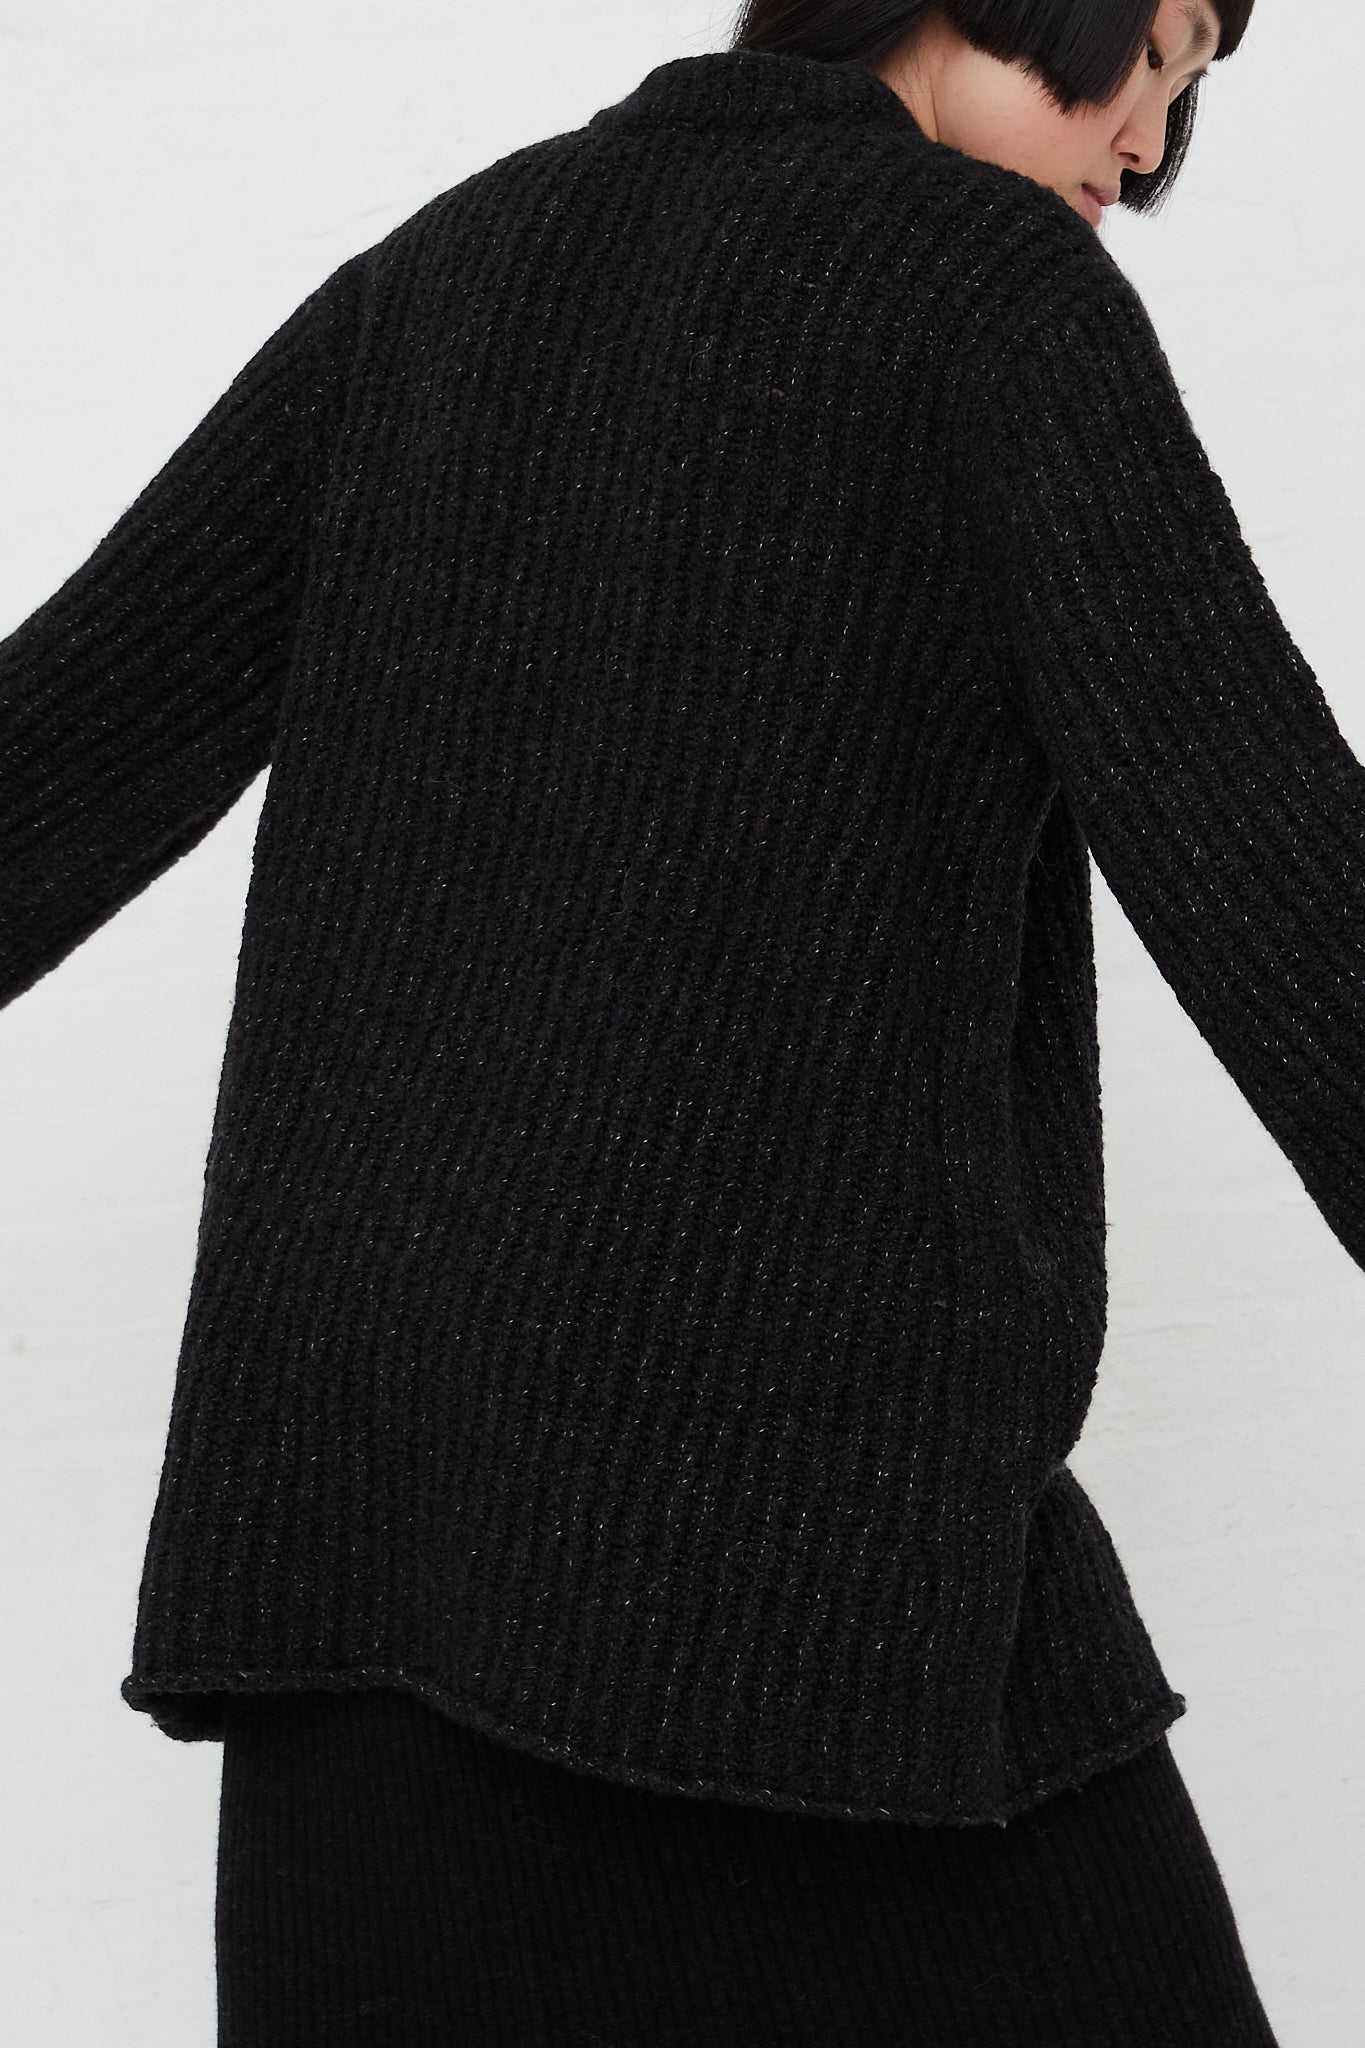 Ladders Merino Crewneck Sweater in Black by Lauren Manoogian for Oroboro Back